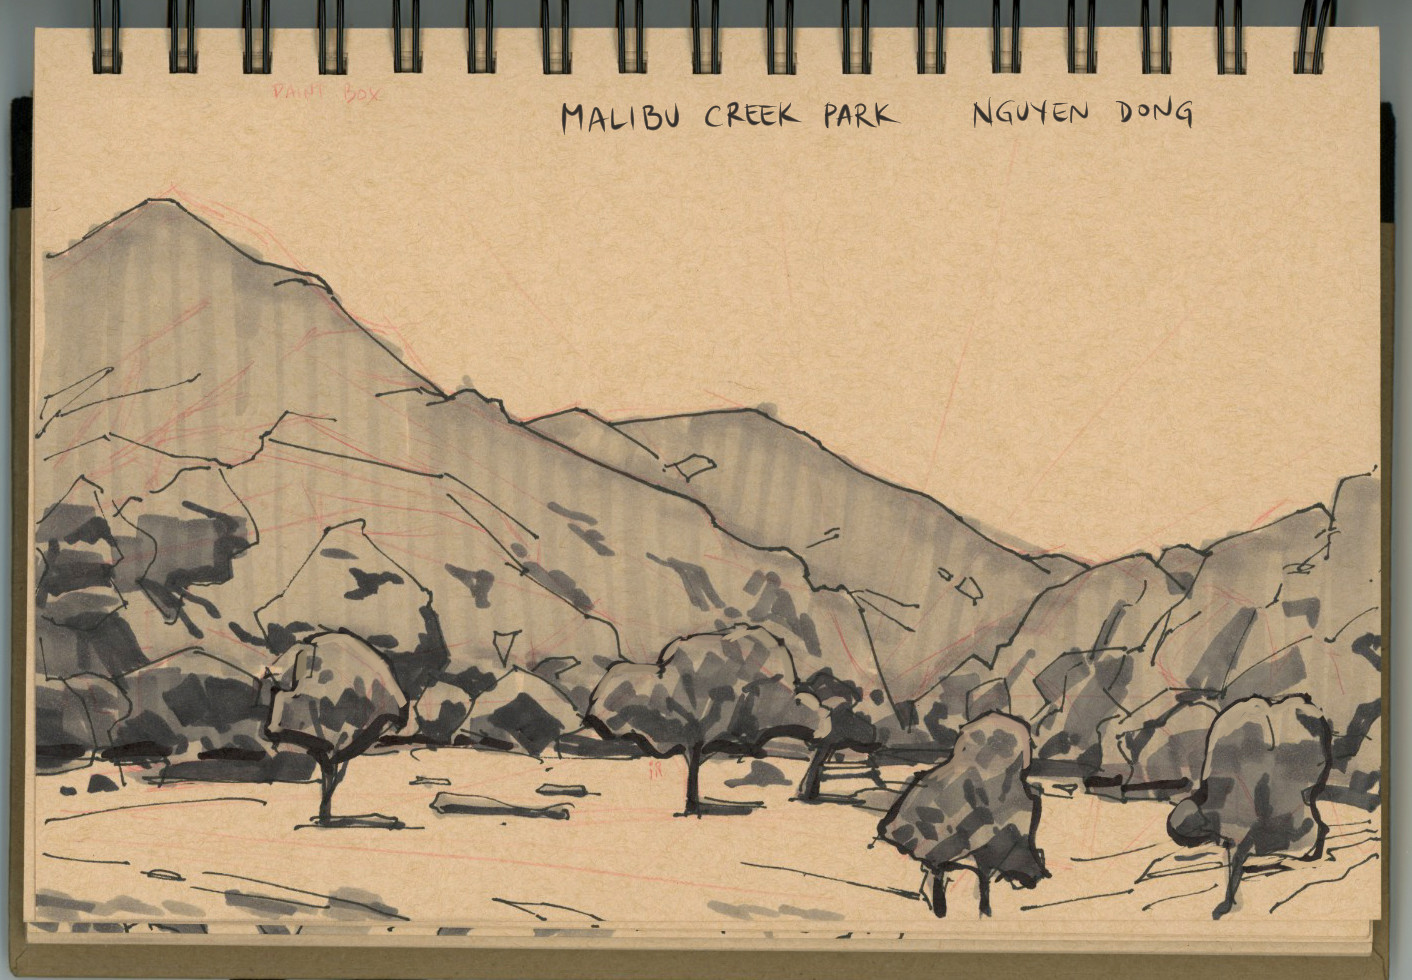 Malibu Creek Park field sketch